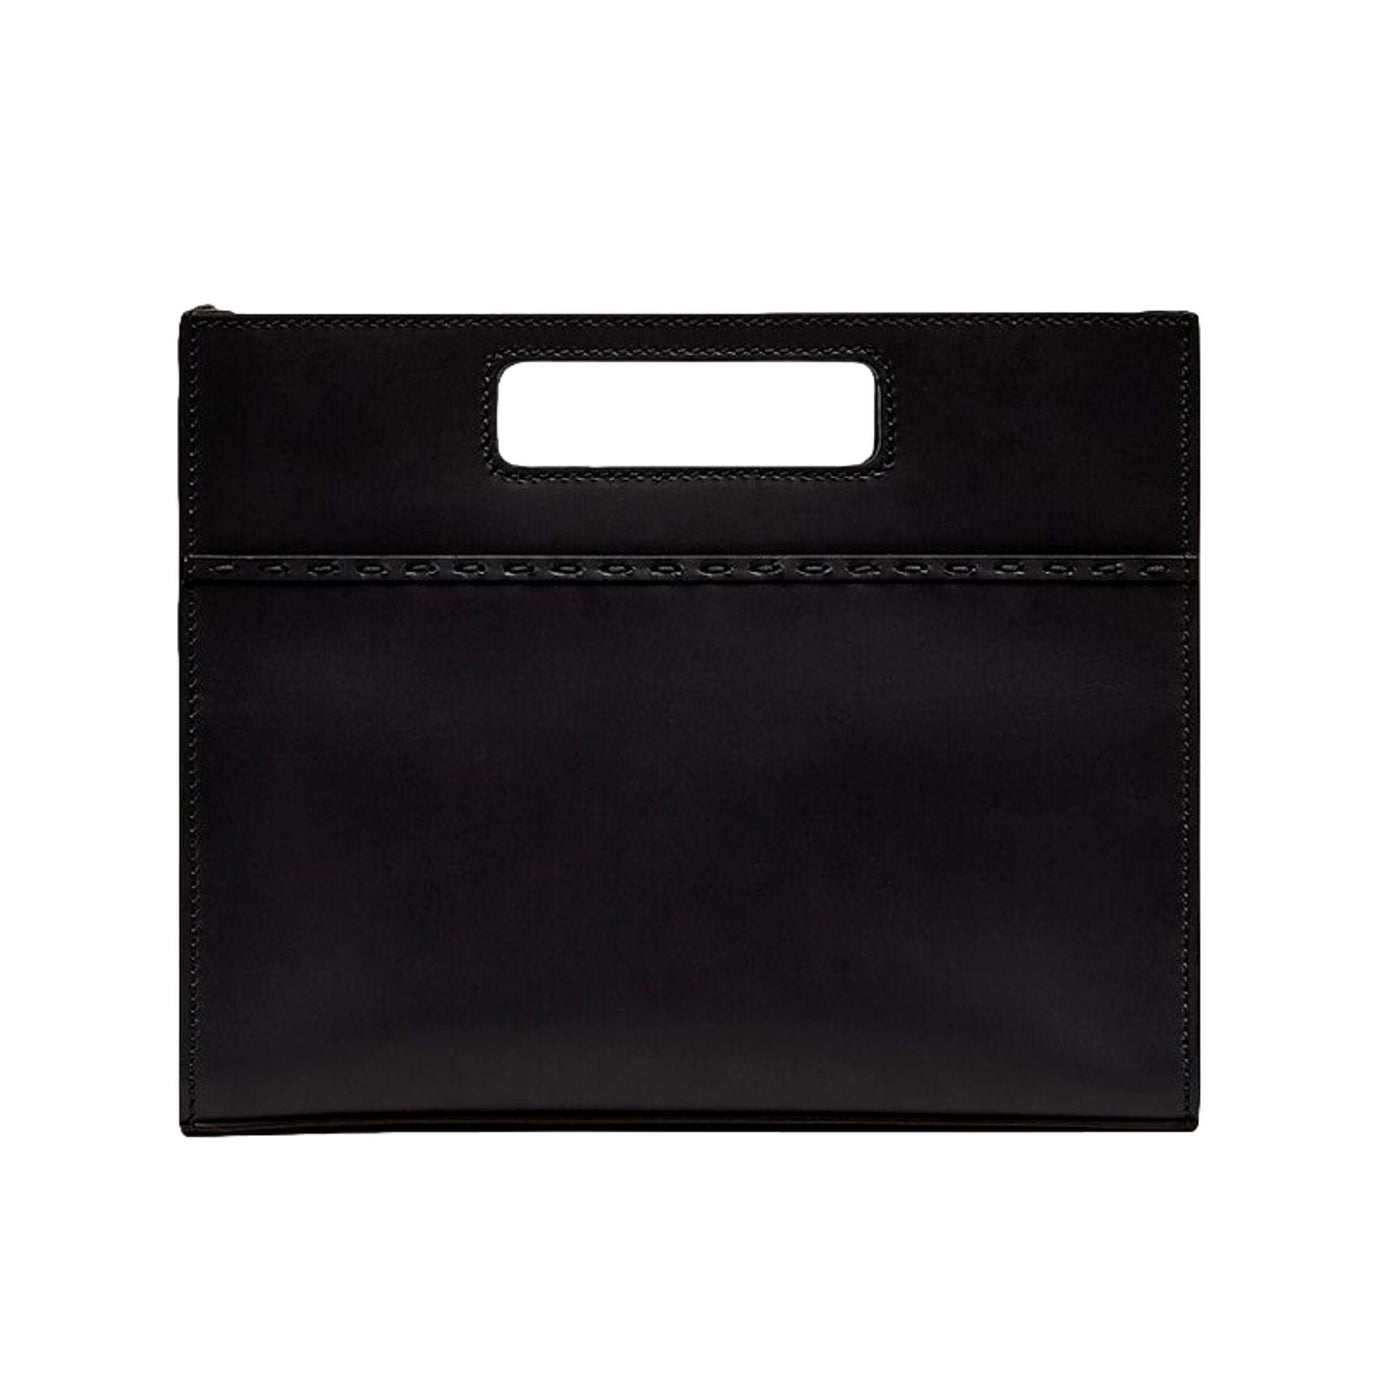 Fendi Logo 2-Way Smooth Black Leather Small Tote Bag - LUXURYMRKT